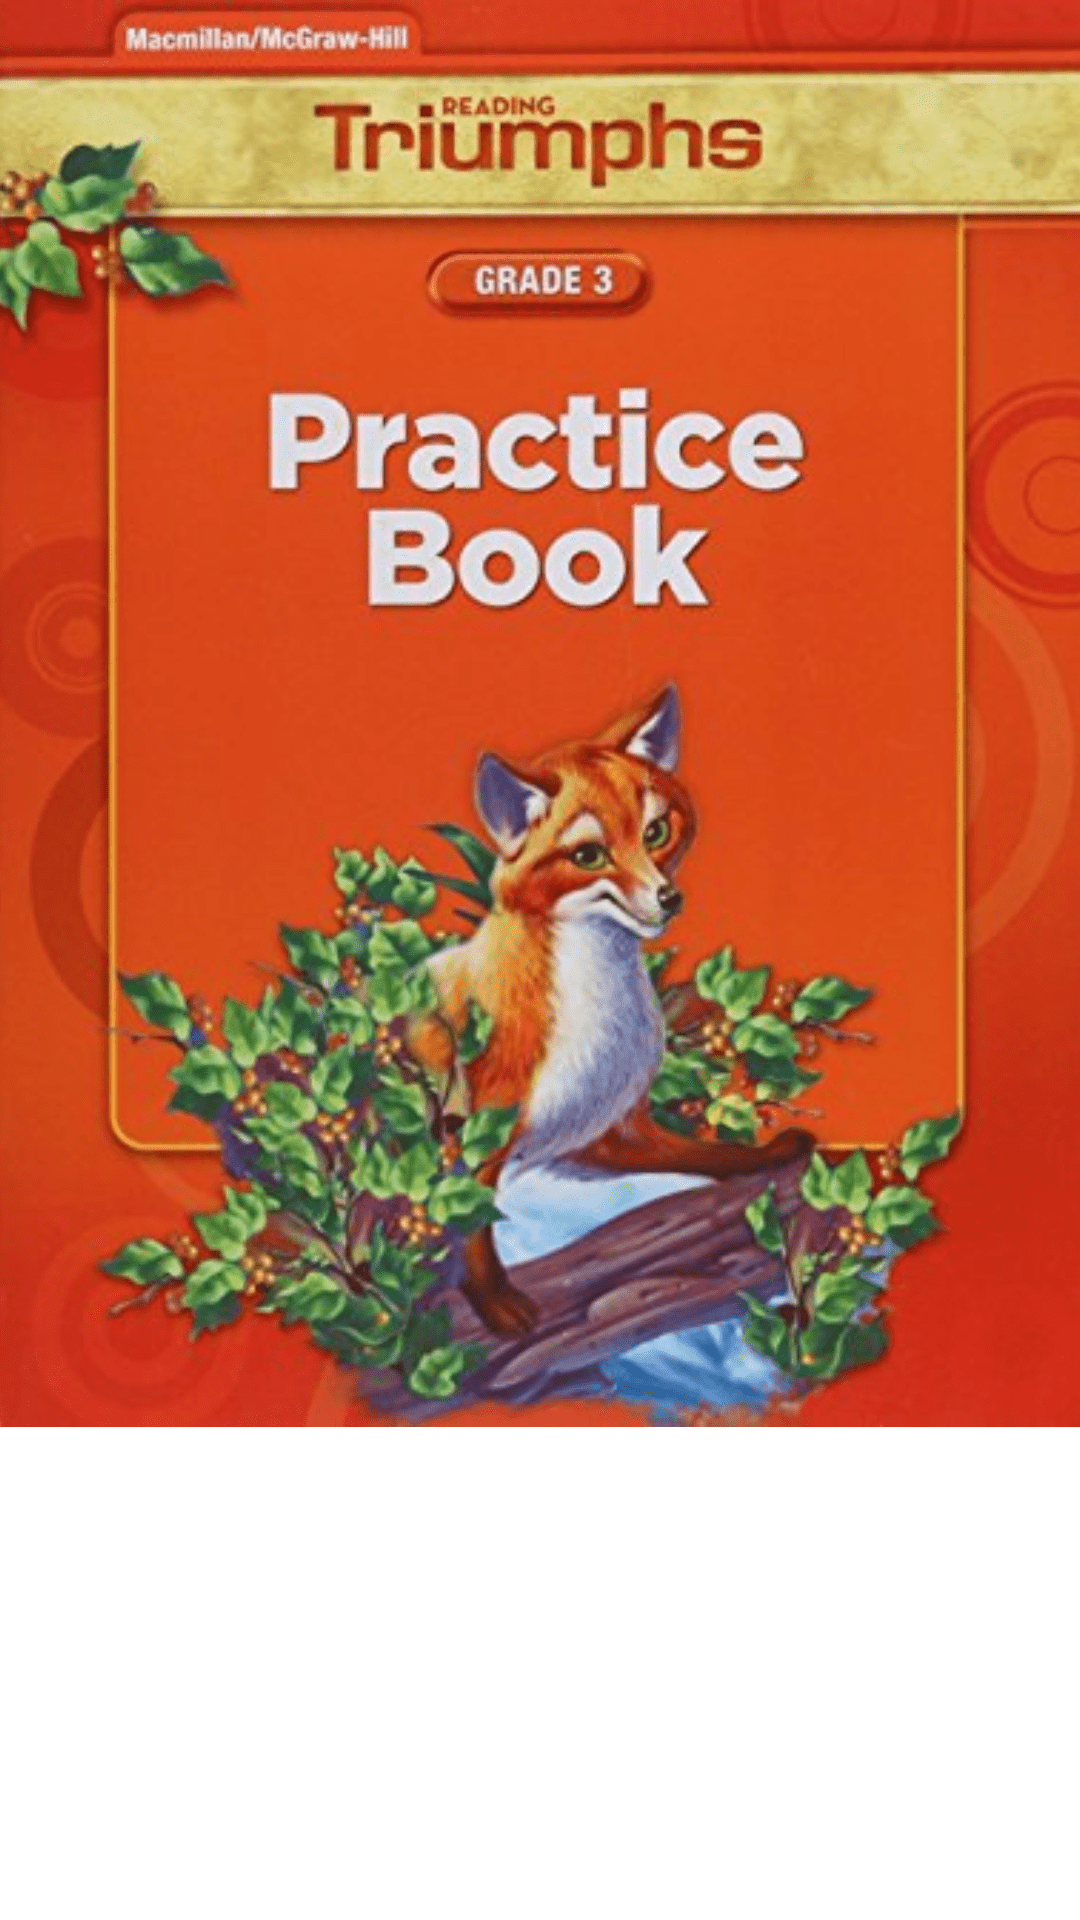 Practice book: Grade 3- Reading Triumphs